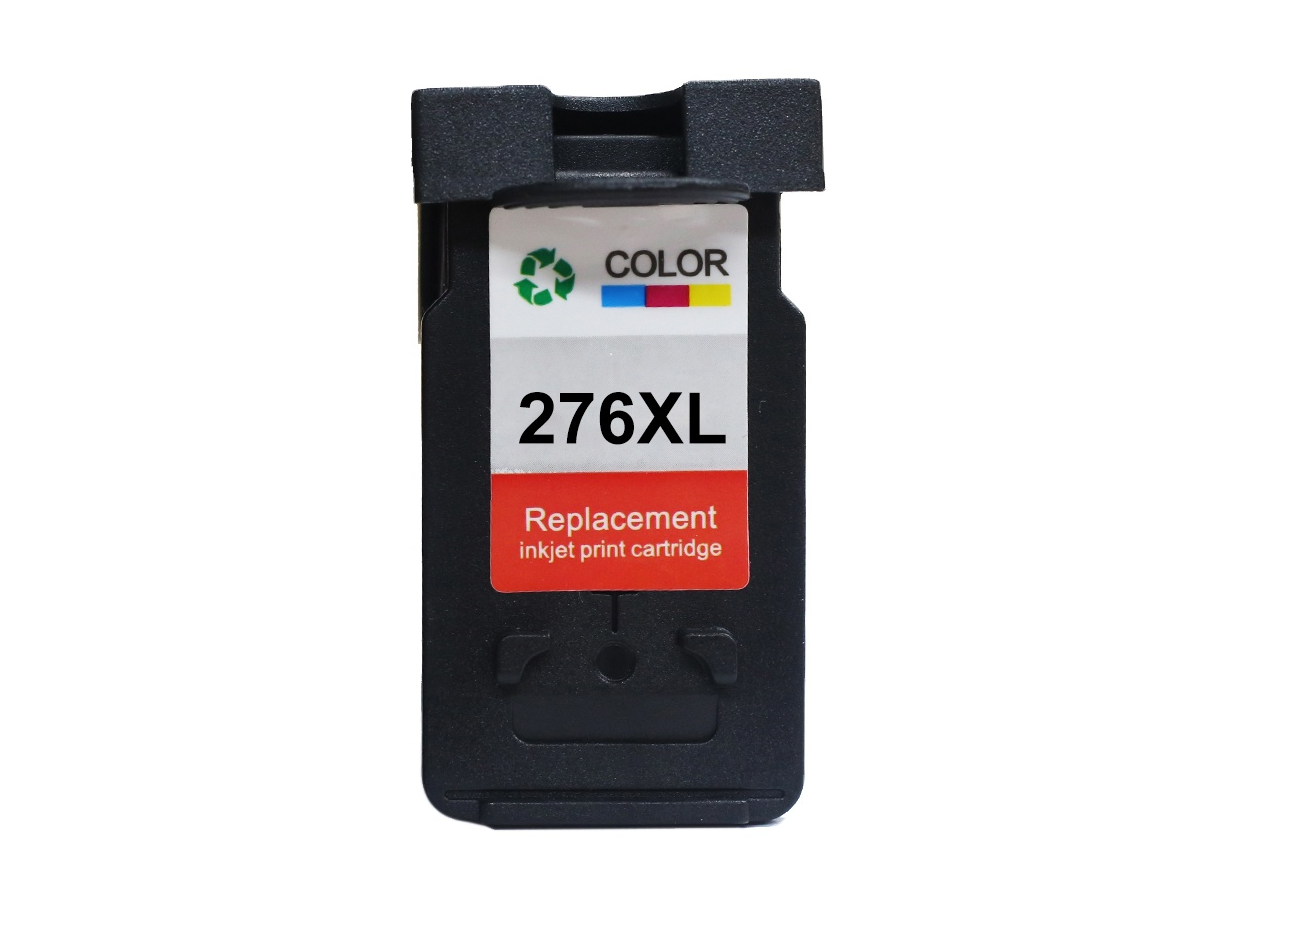 Canon Pixma TS3522 color CL-276XL ink cartridge